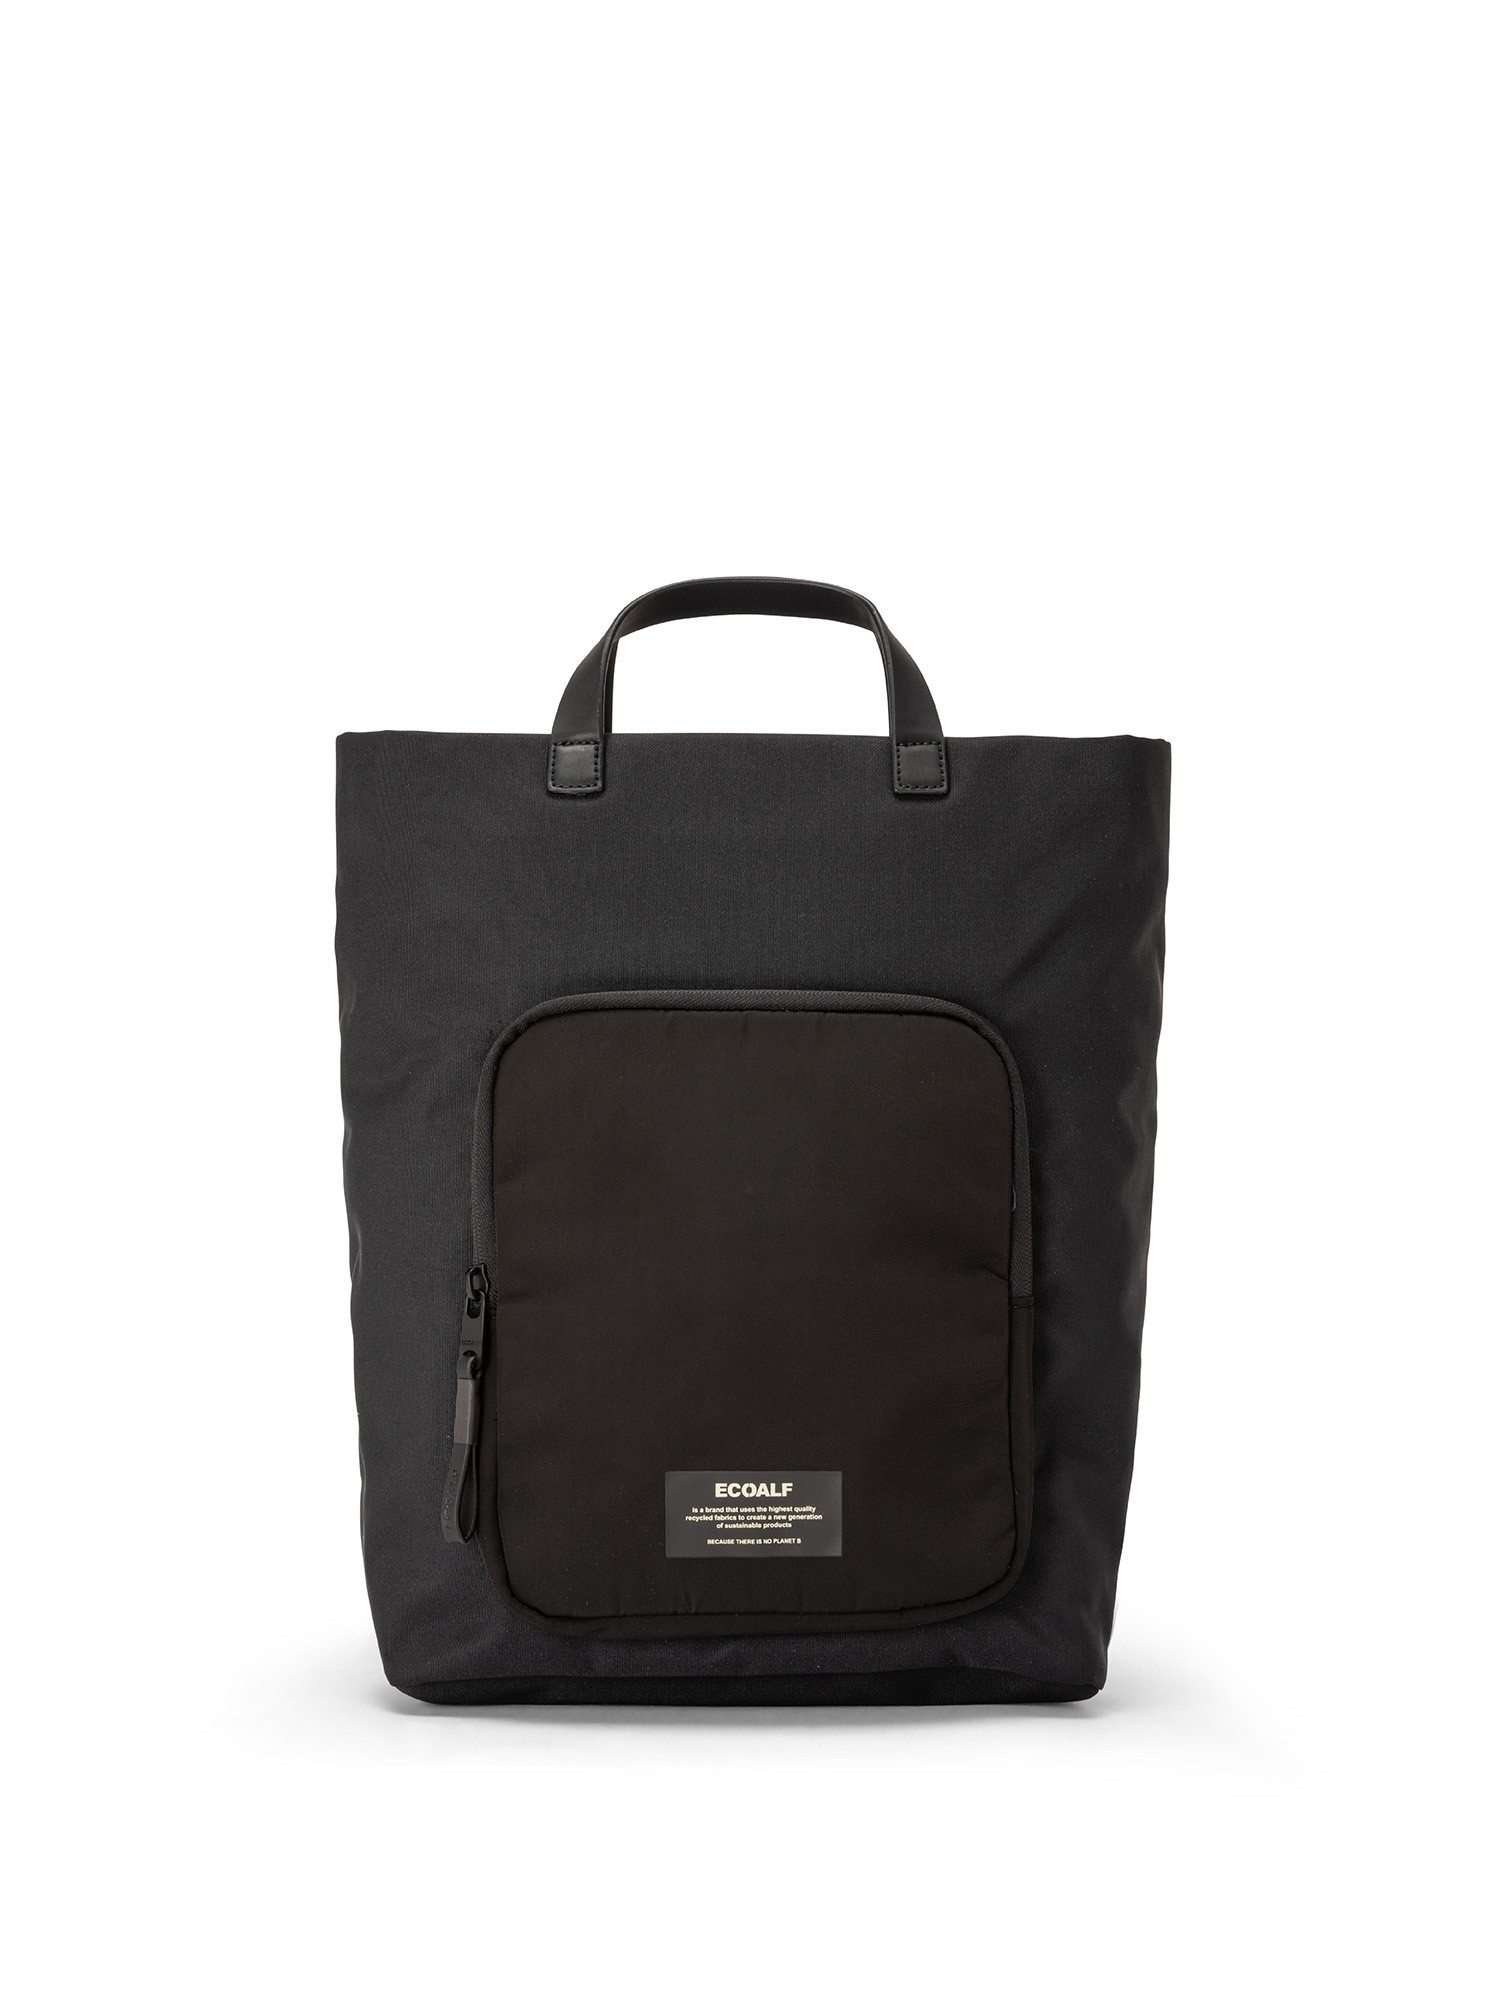 Ecoalf - Saka waterproof backpack, Black, large image number 0